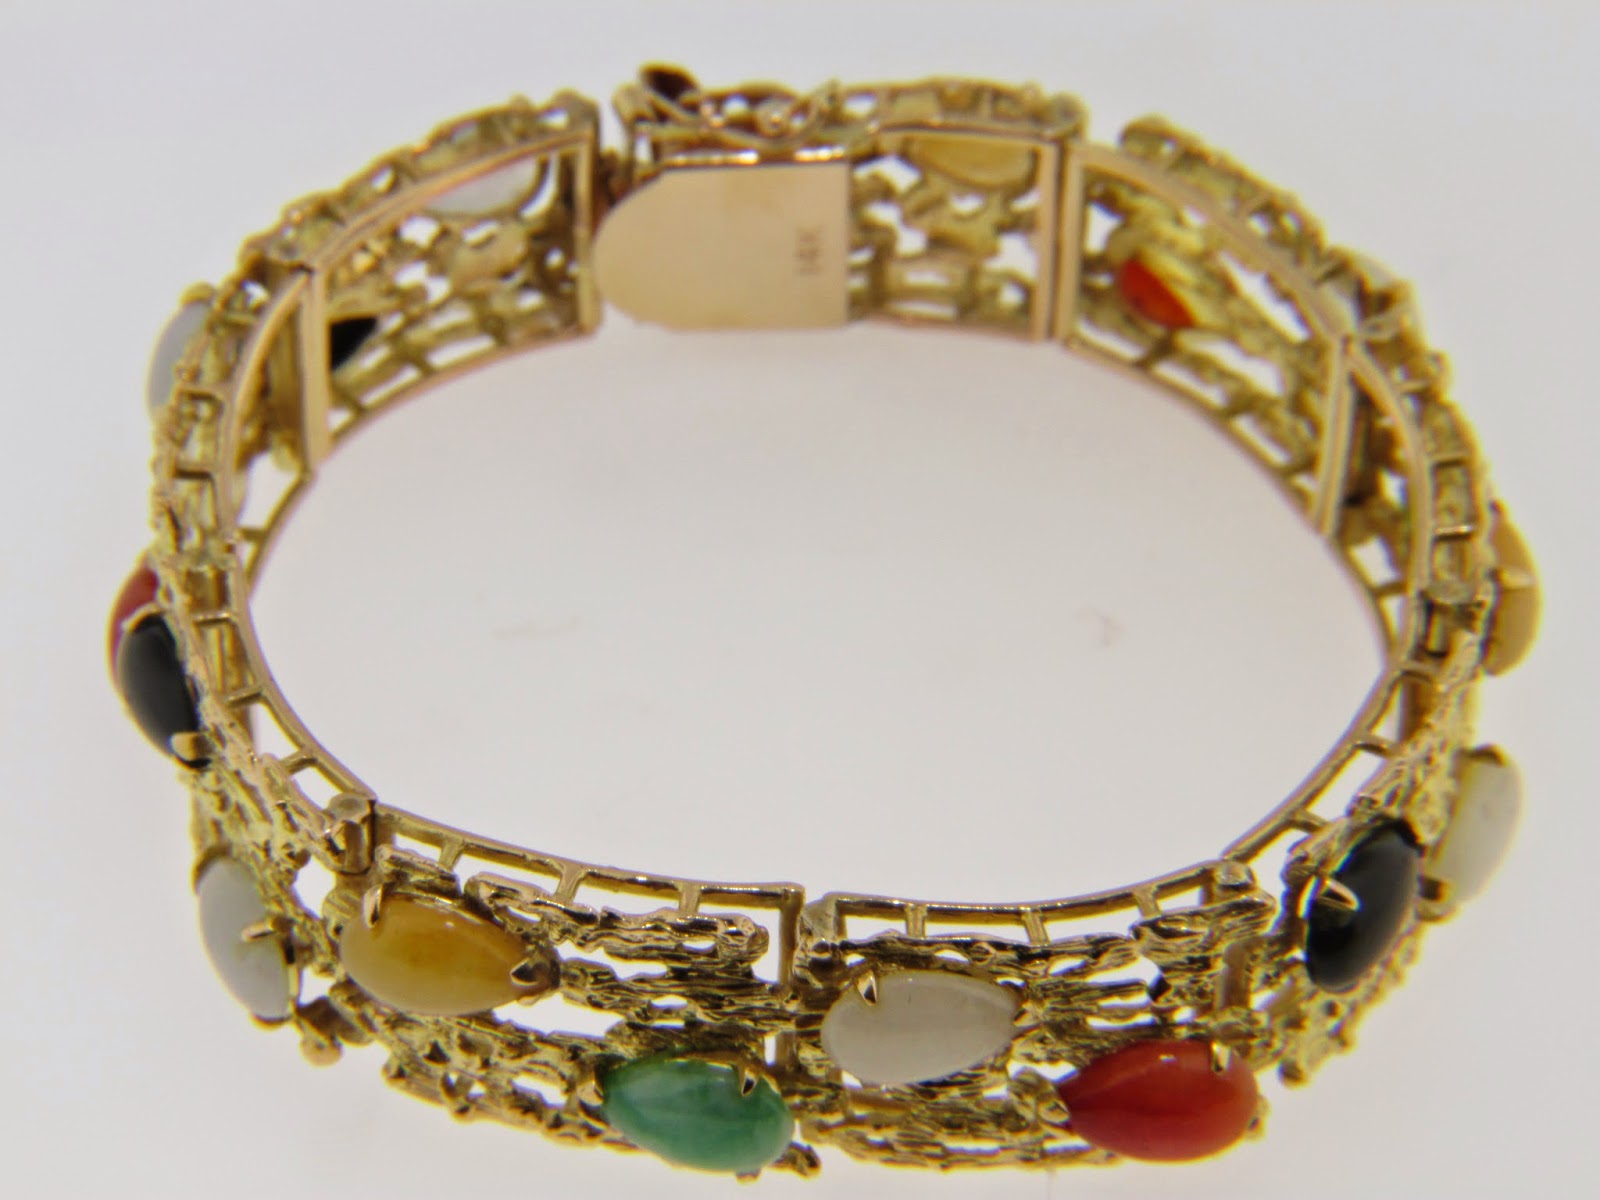 14k gold bracelet with jade jade beads